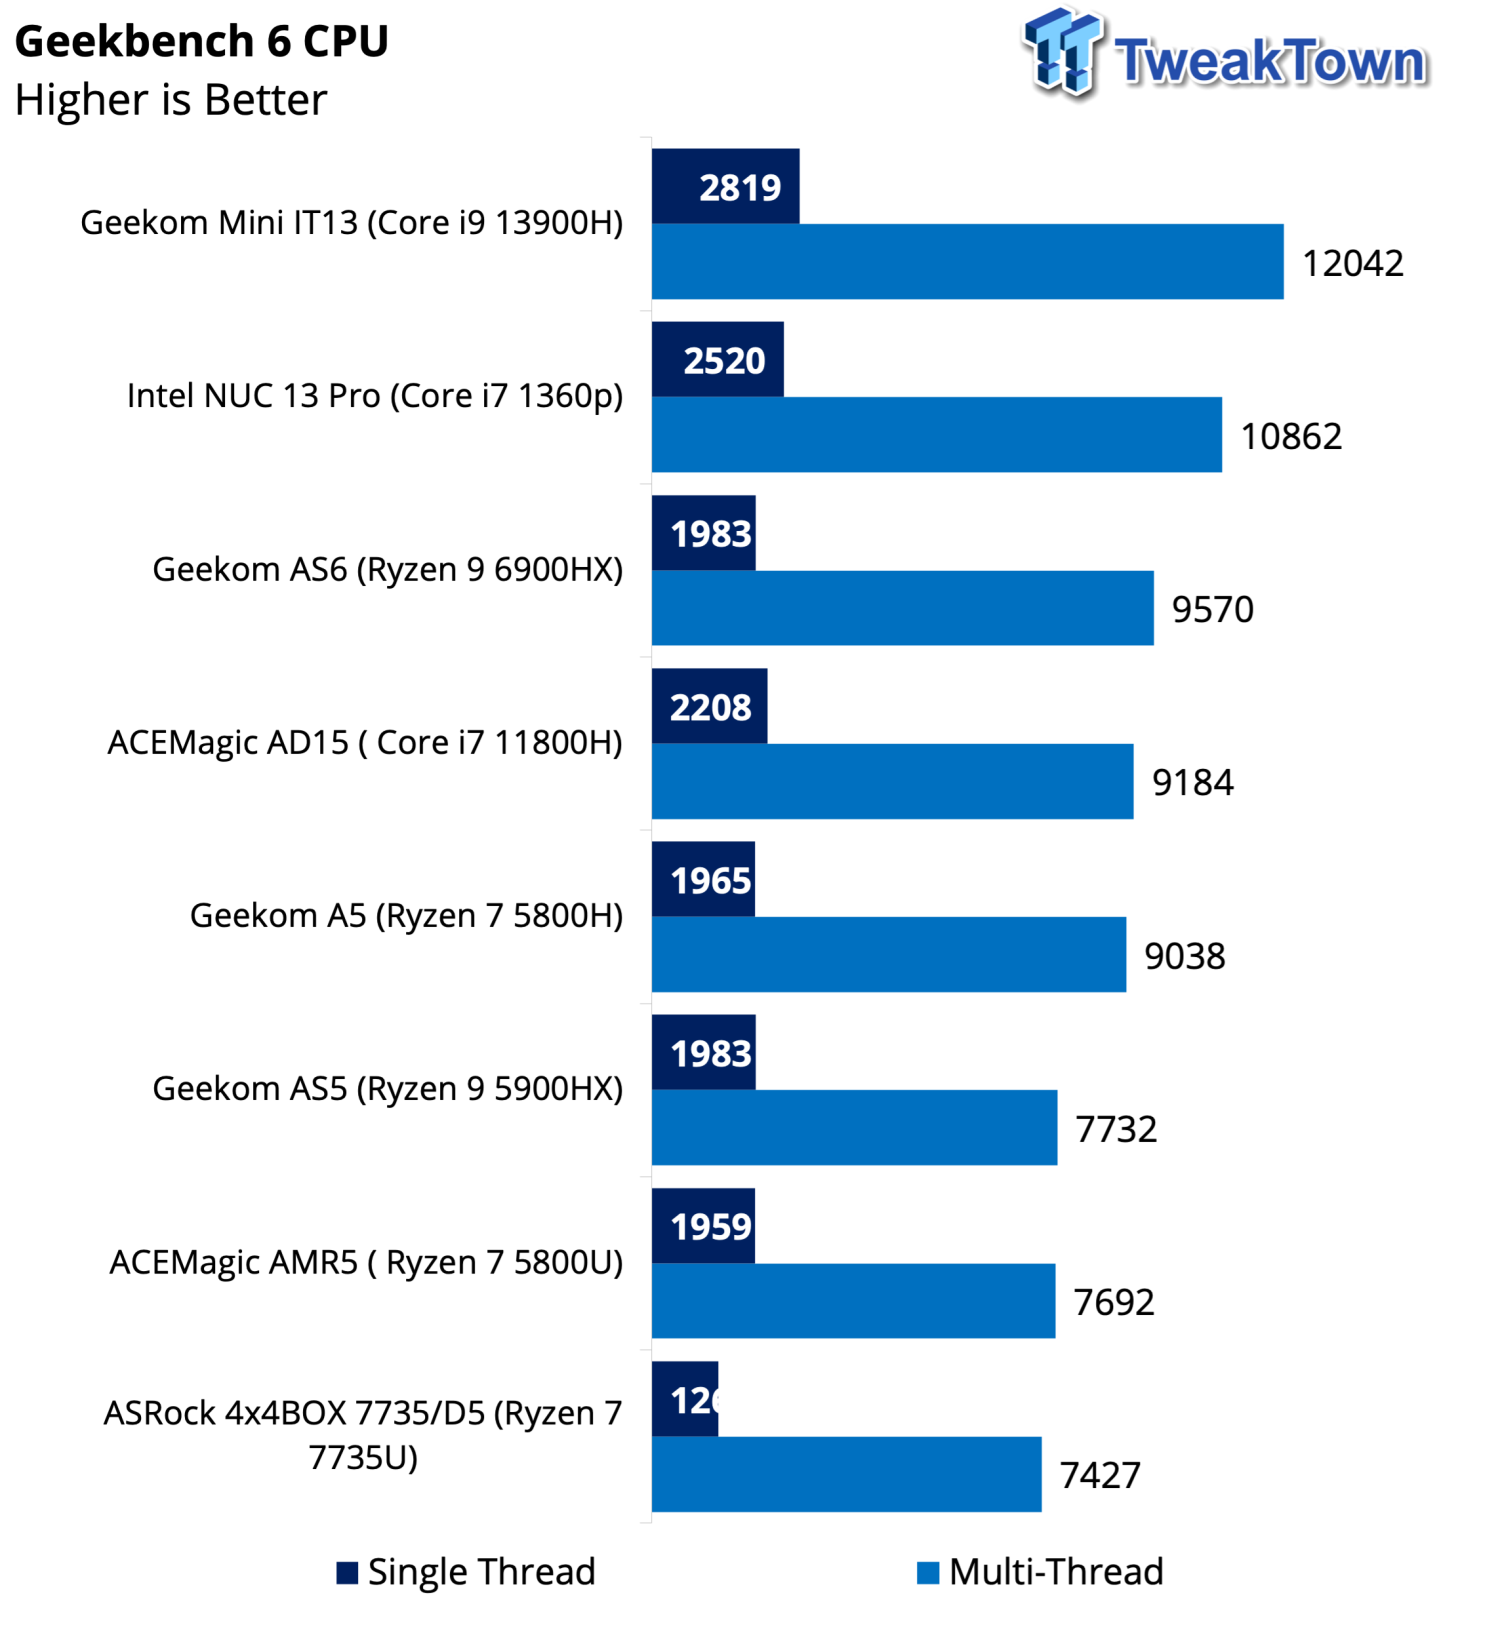 GEEKOM A5 AMD Ryzen 7 5800H Mini PC Review